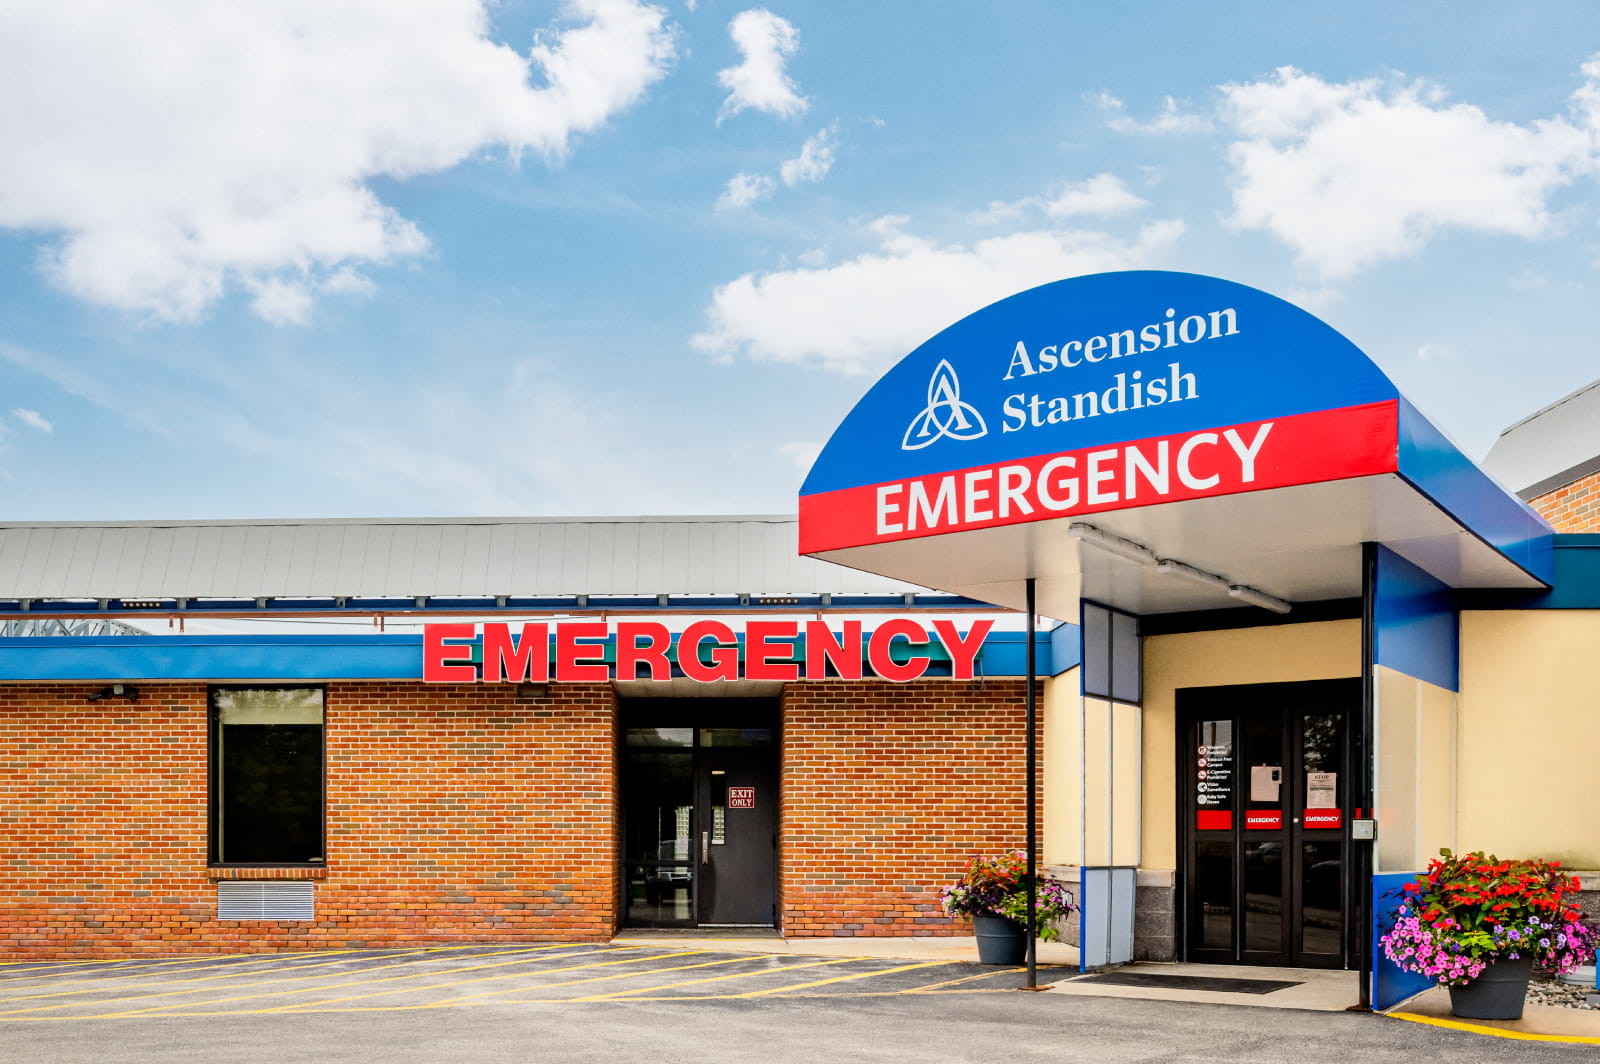 Ascension Standish Hospital - Emergency